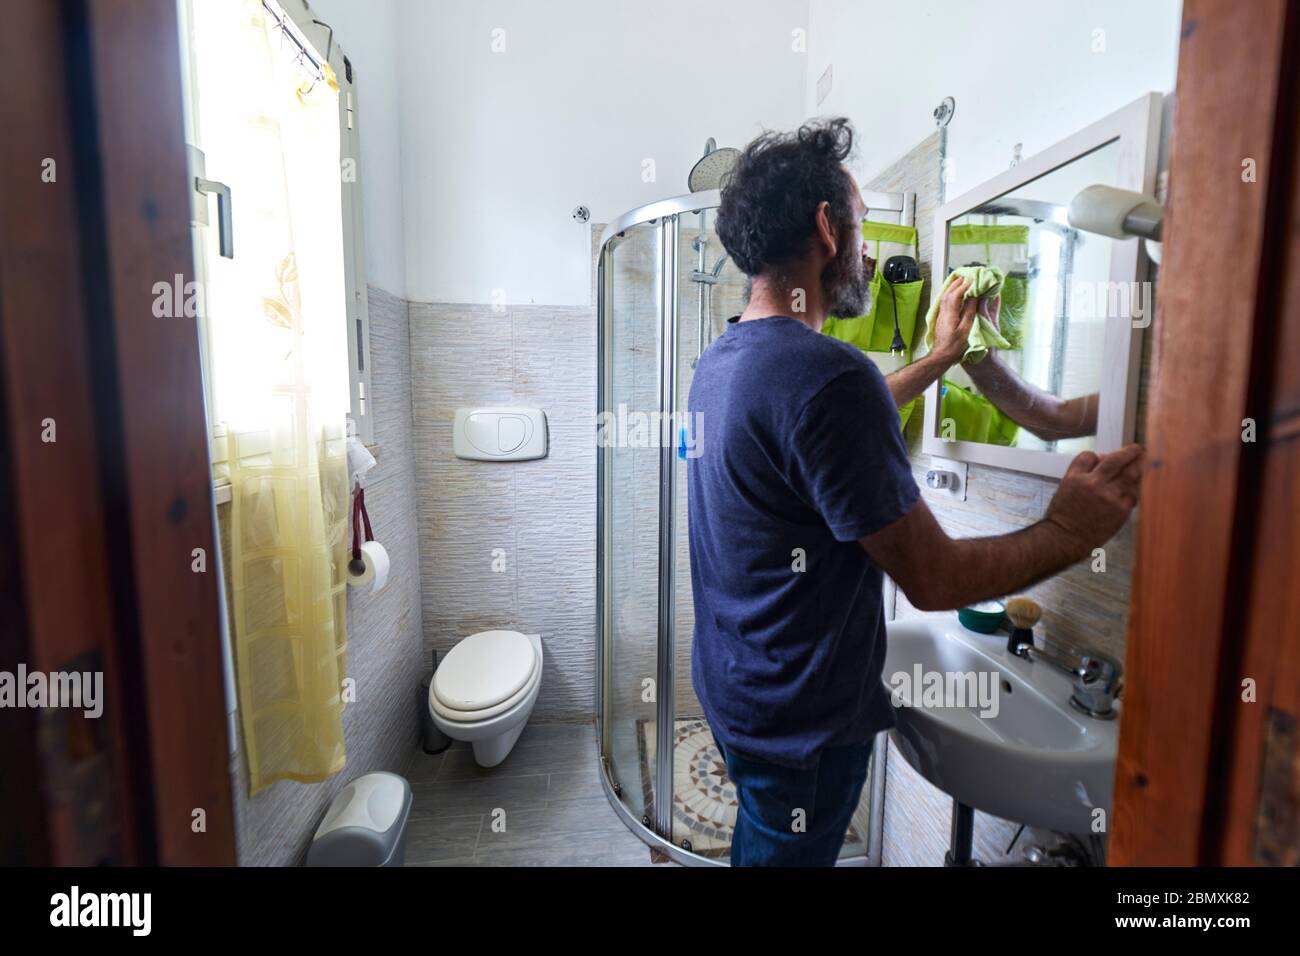 man cleaning the bathroom mirror during coronavirus quarantine Stock Photo